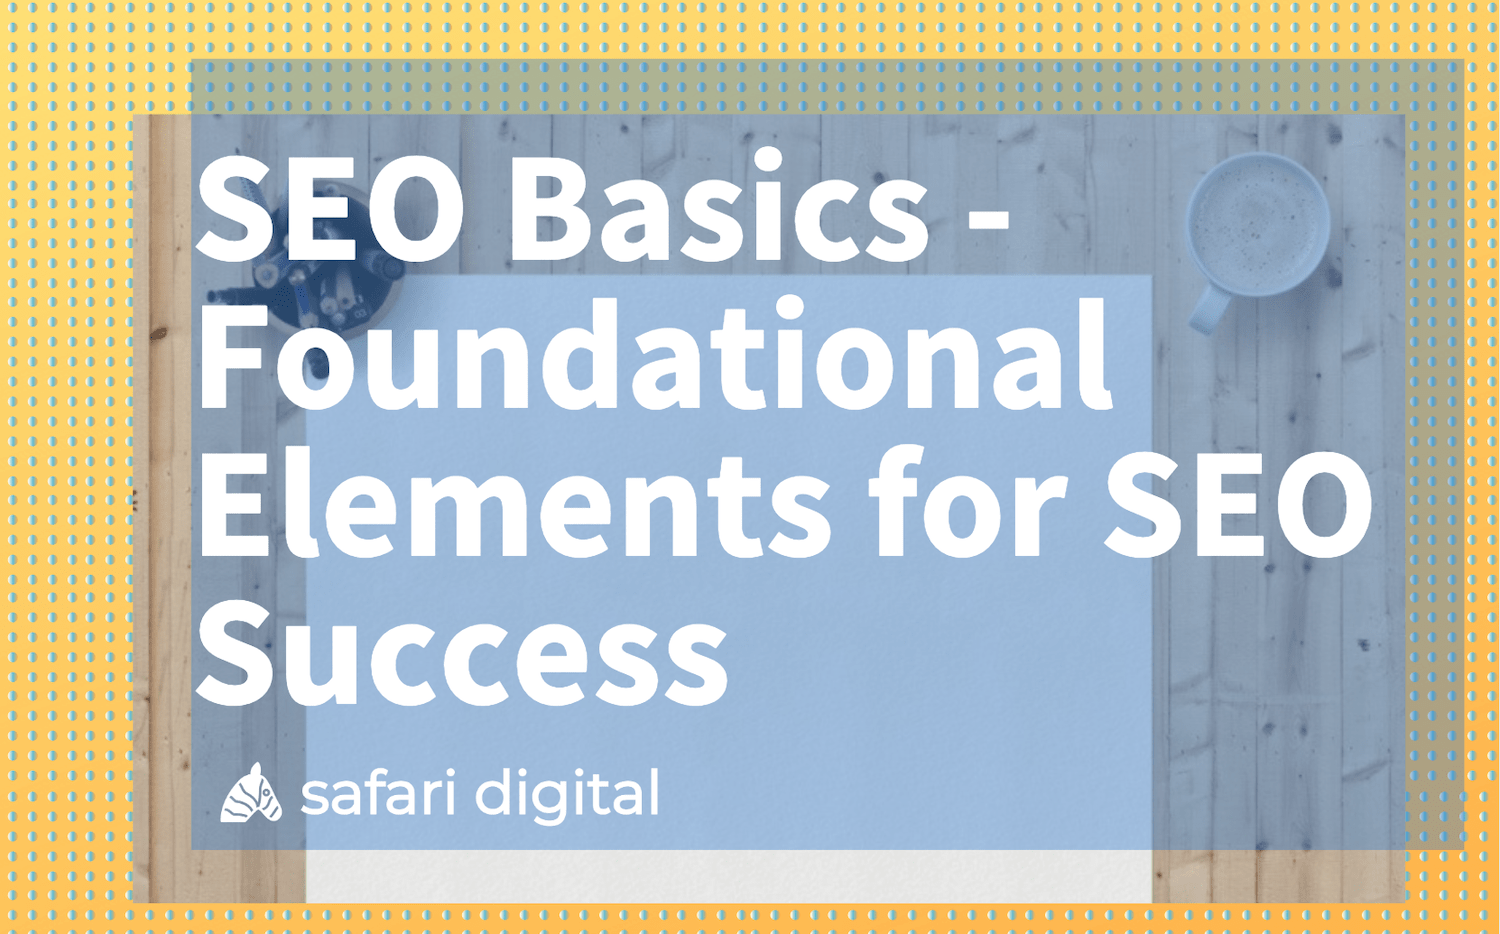 SEO basics - foundation elements for SEO success banner image Large